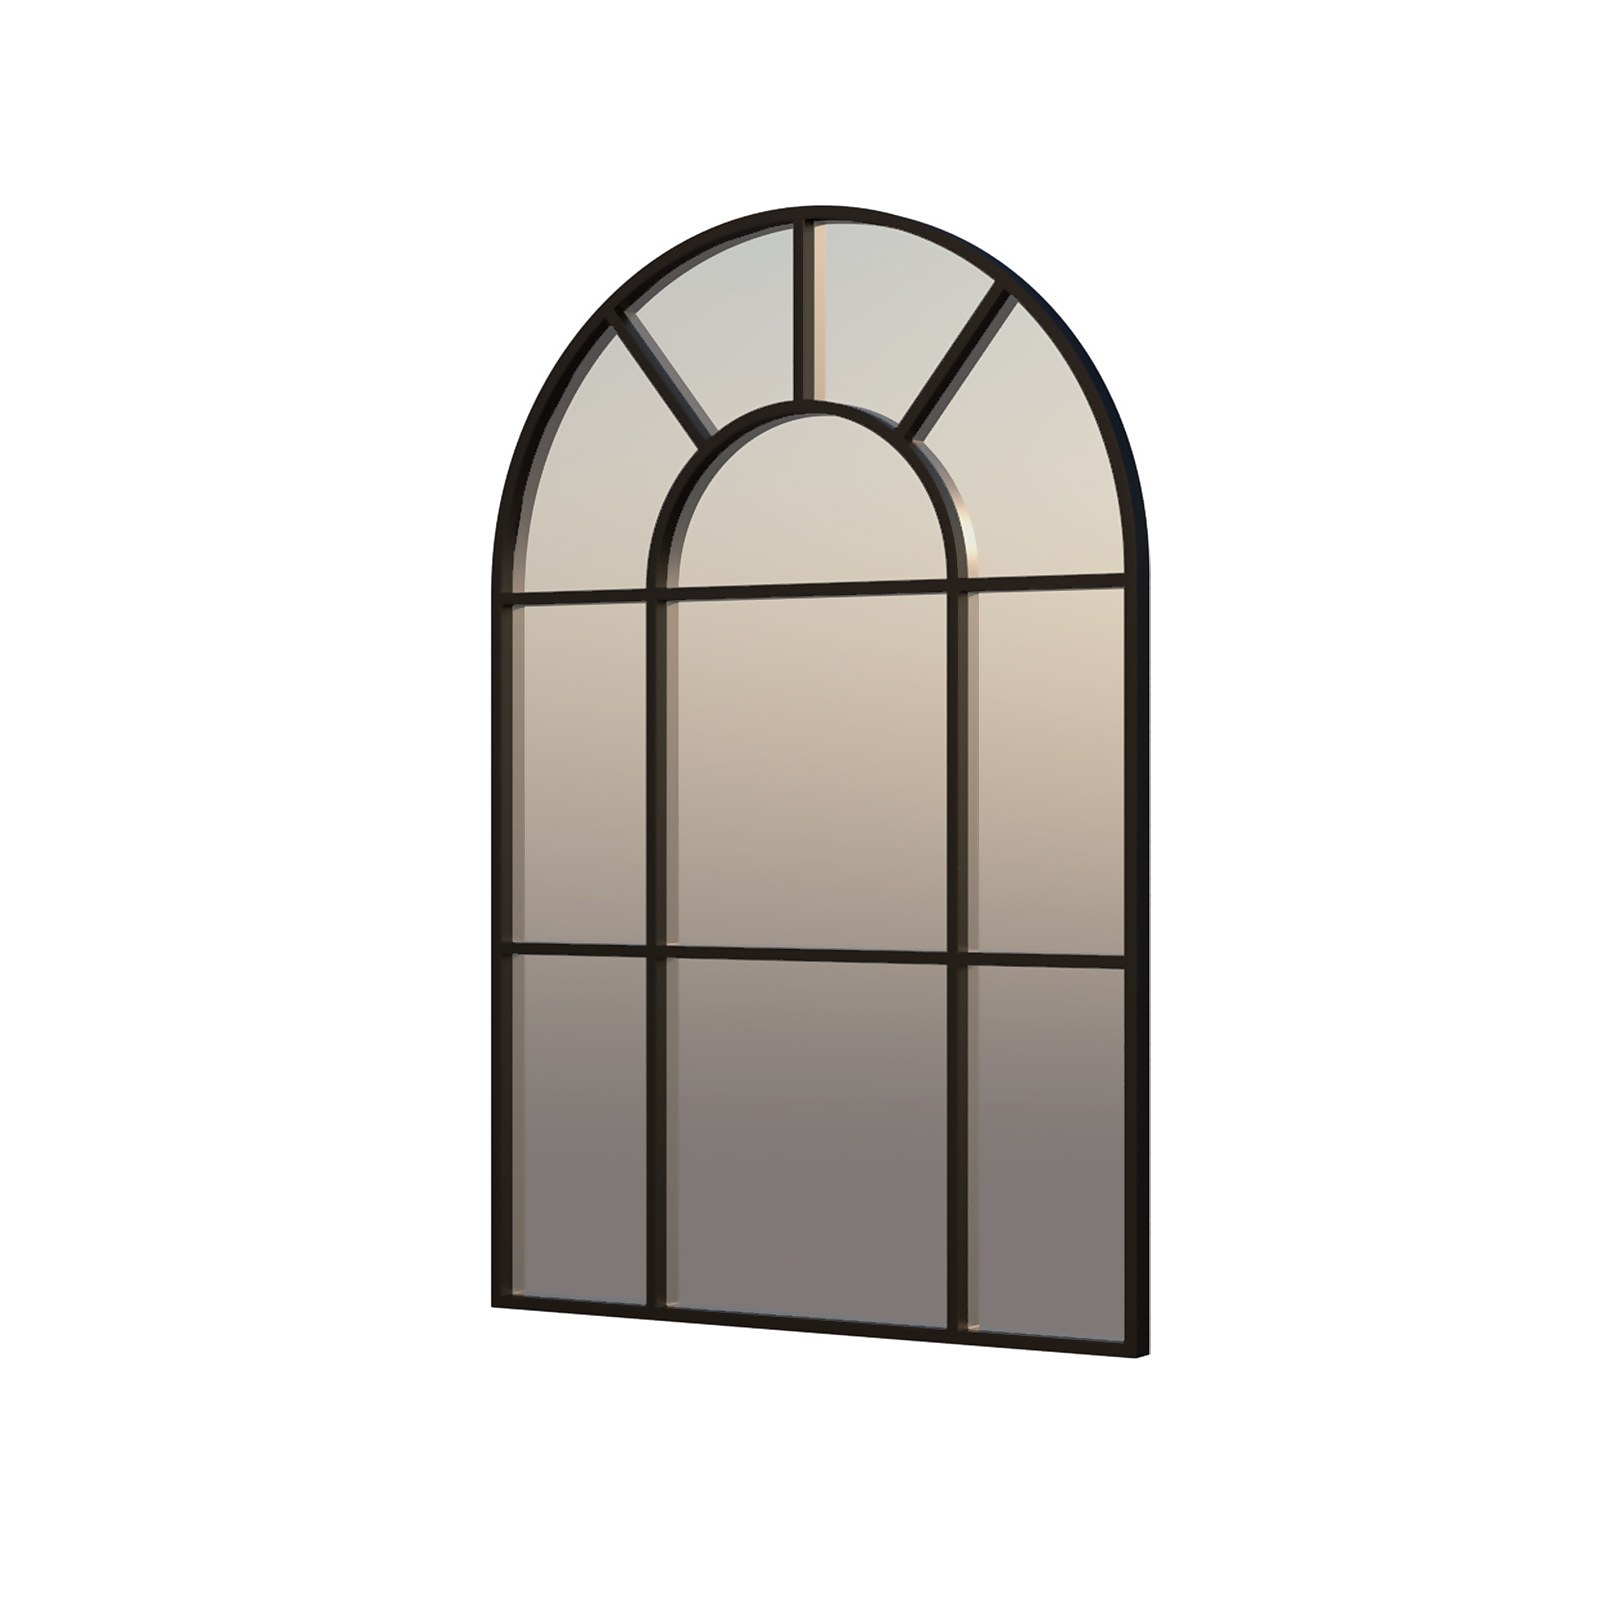 Photo of Black Iron Arch Window Pane Mirror - 70x50cm